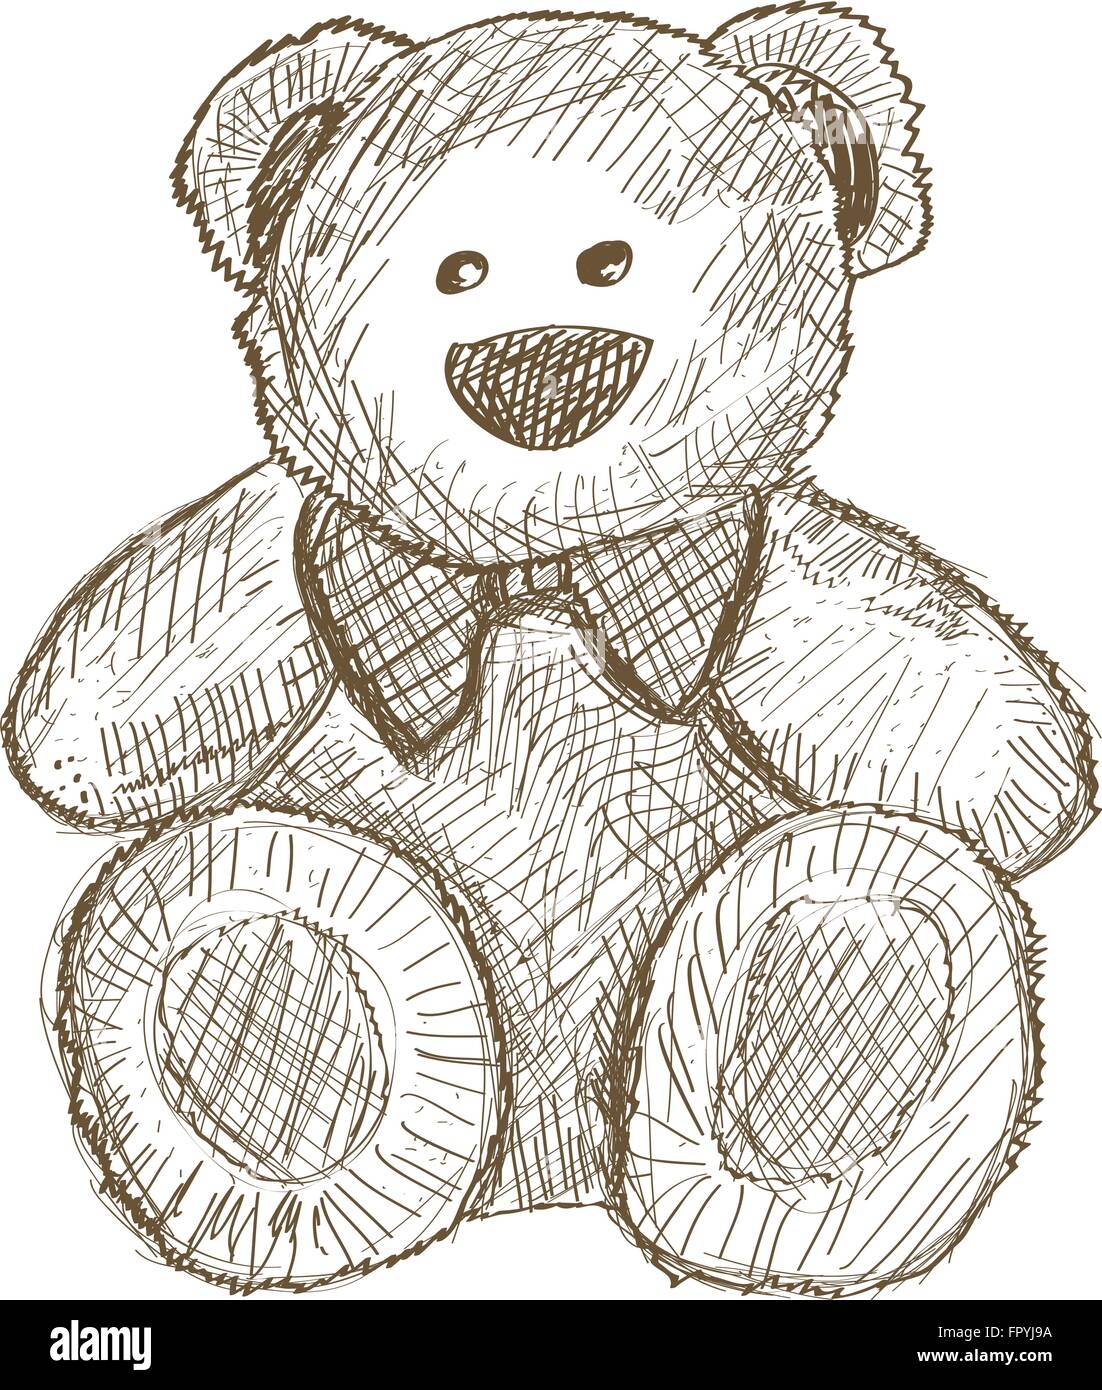 Медведь карандашом игрушка